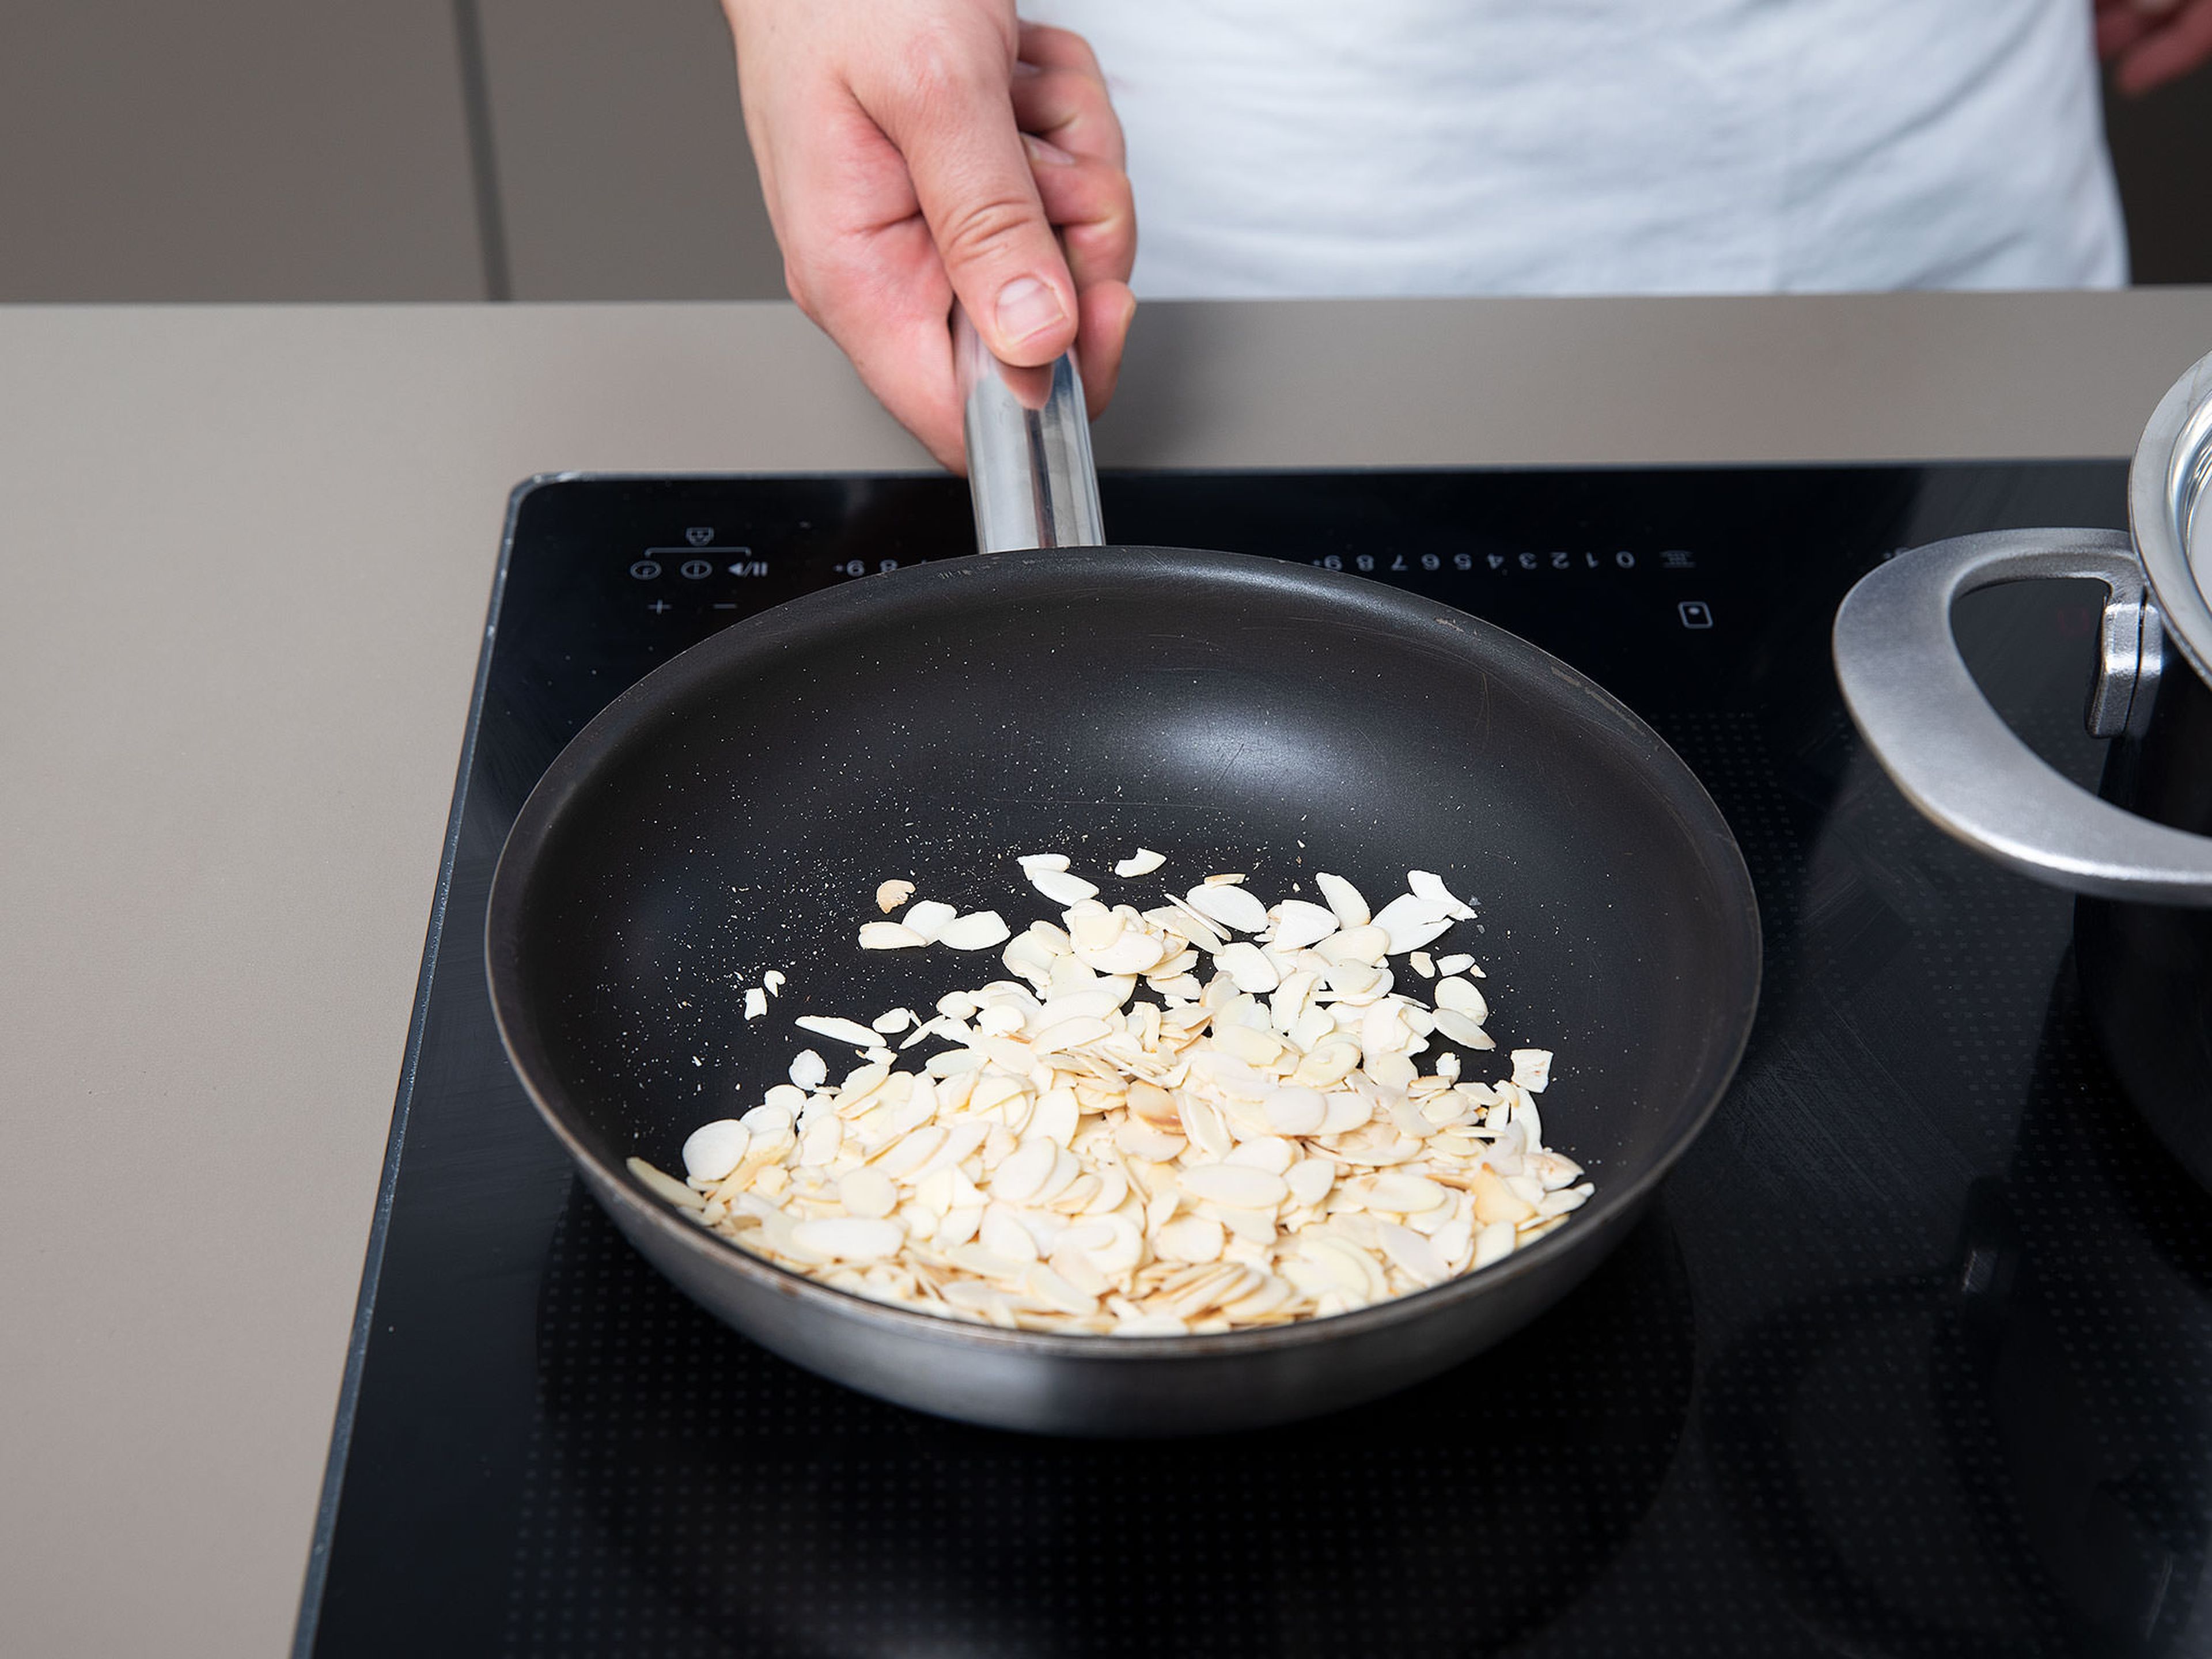 In a frying pan, toast sliced almonds over medium heat until golden.